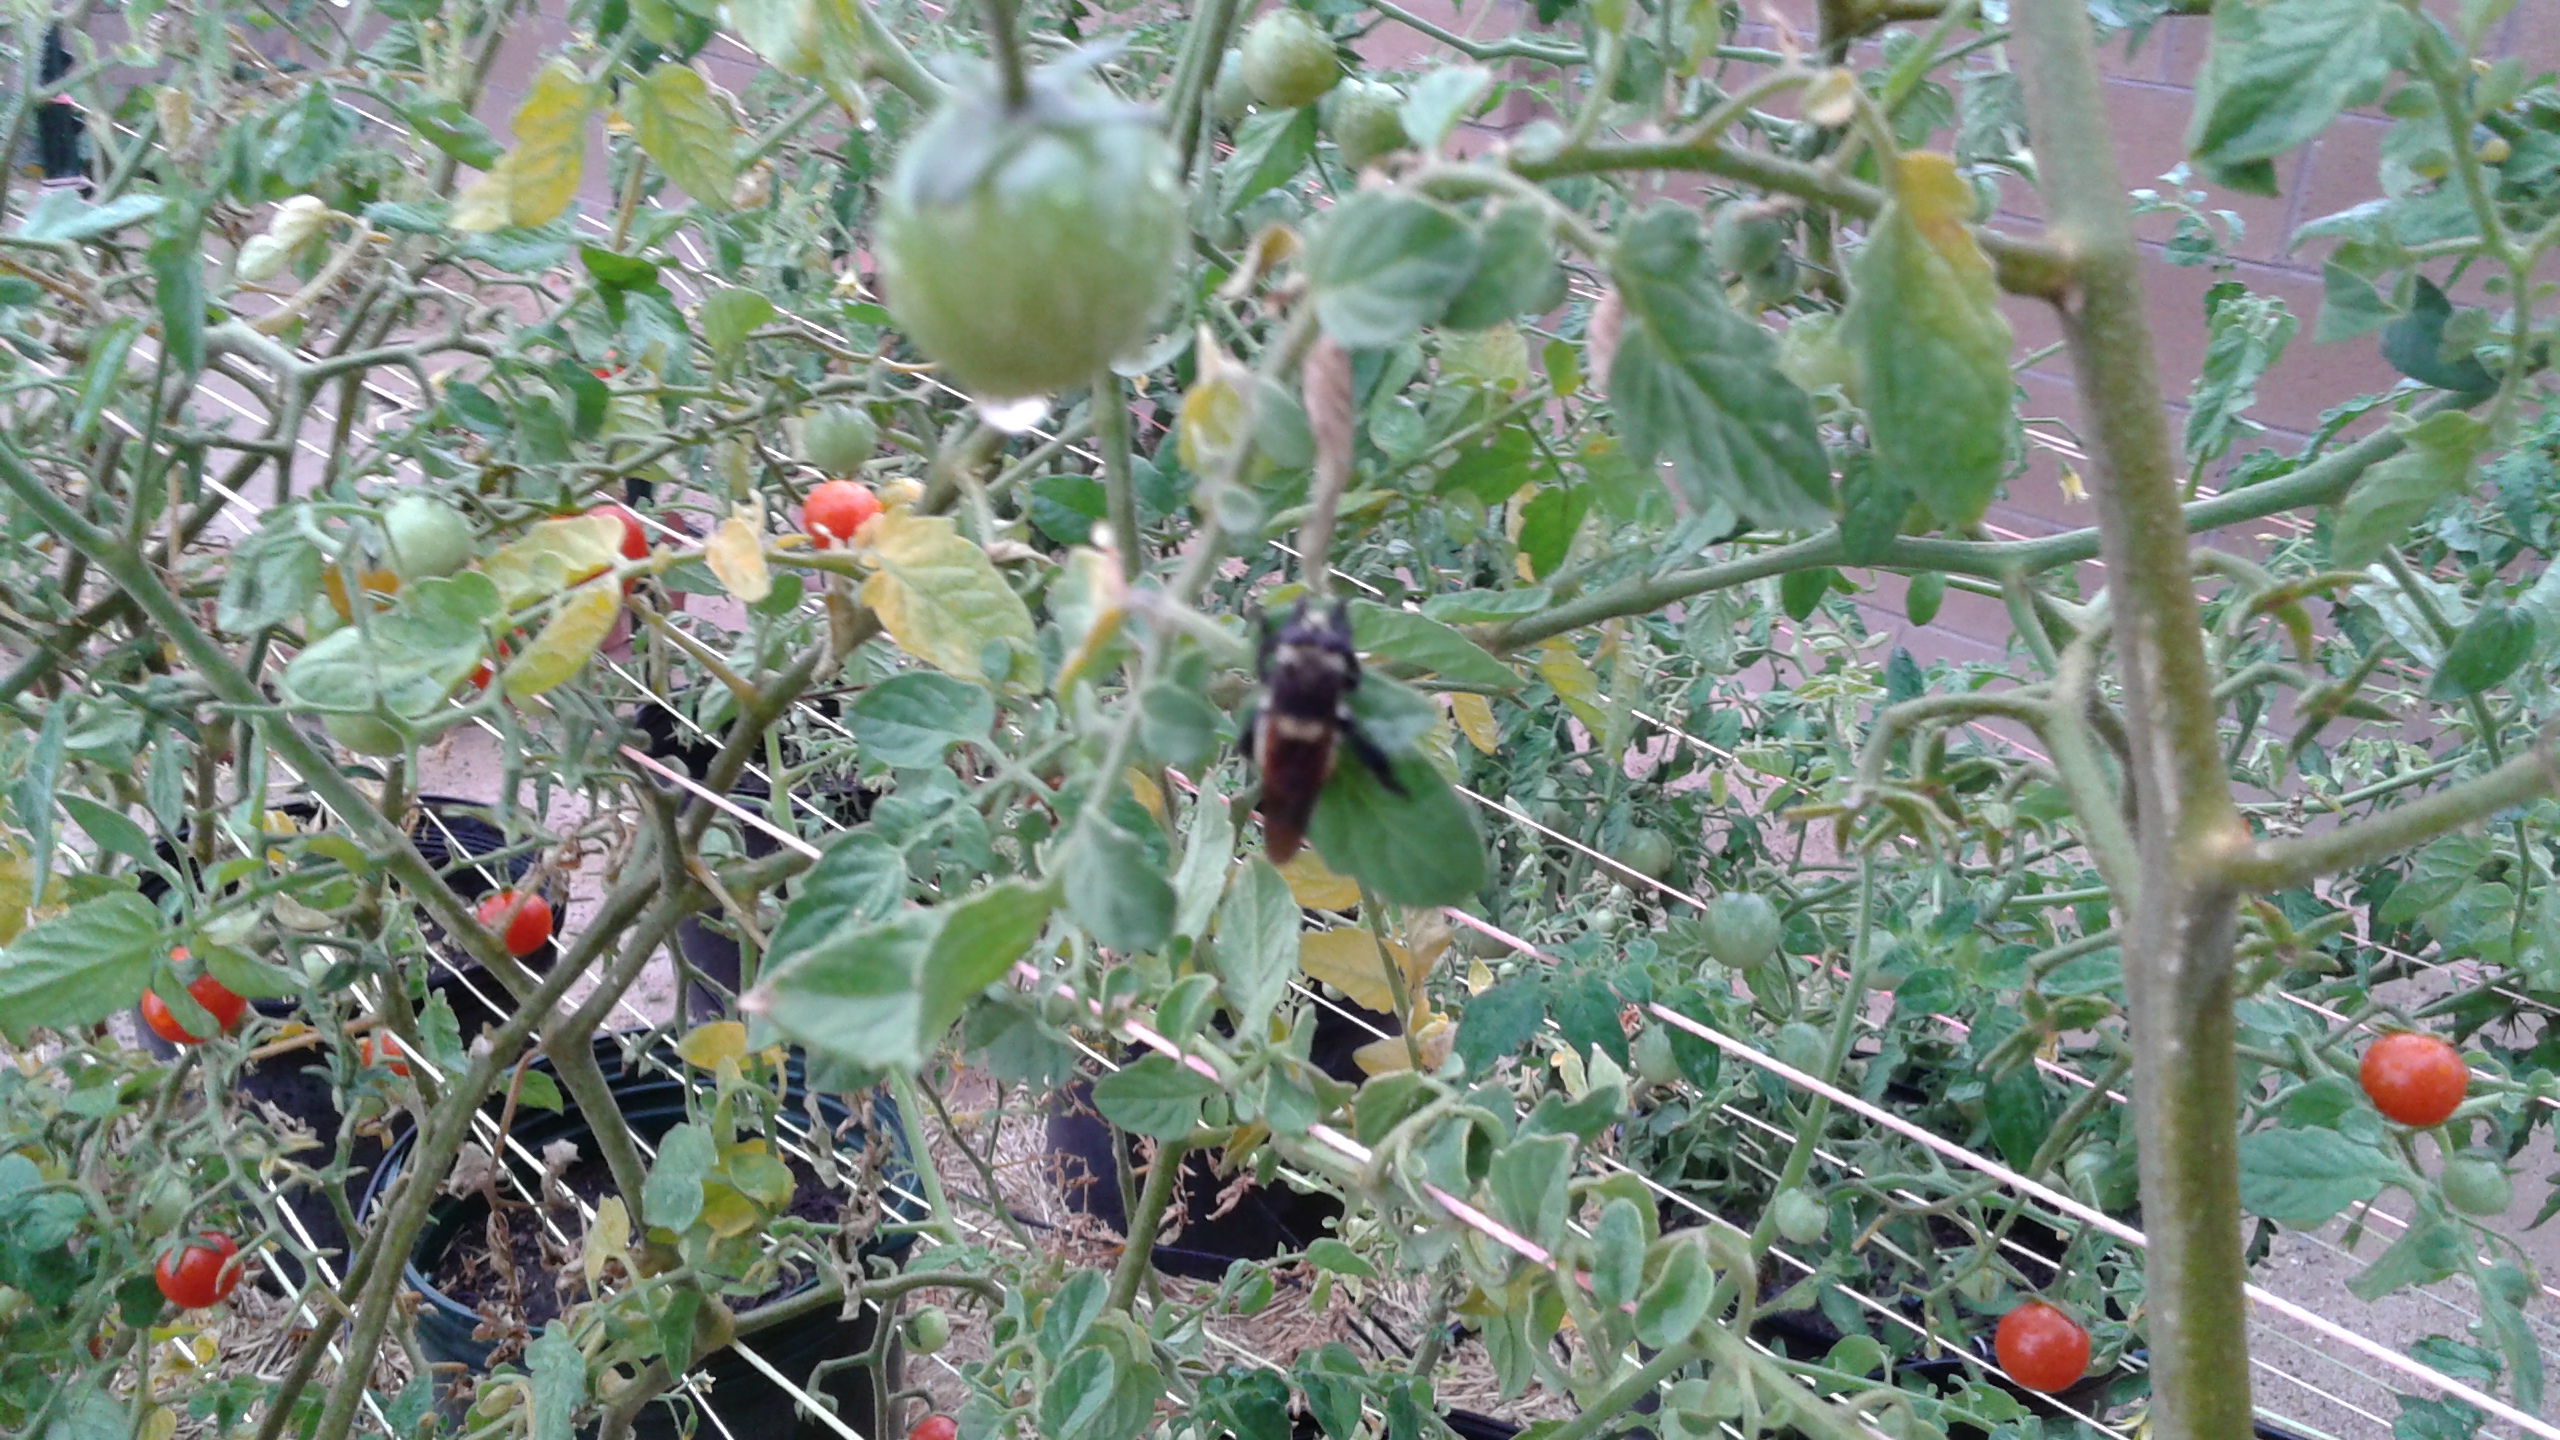 2014 cherry tomatoes